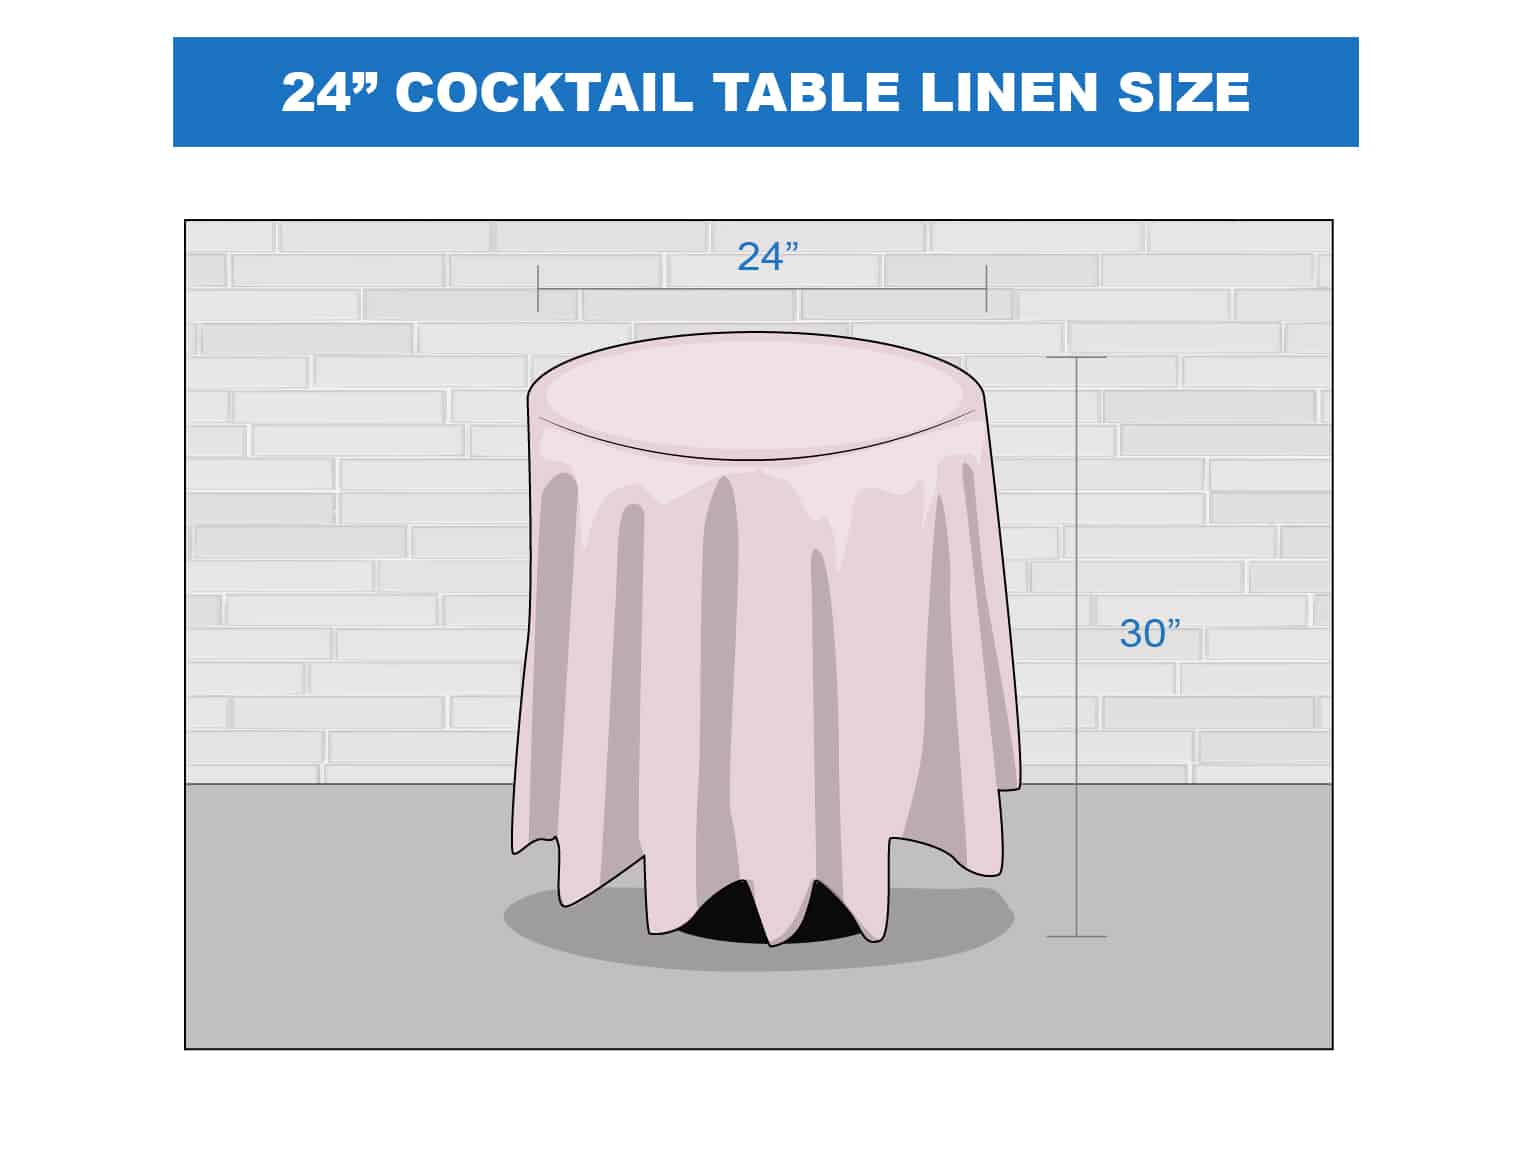 24” cocktail table linen size